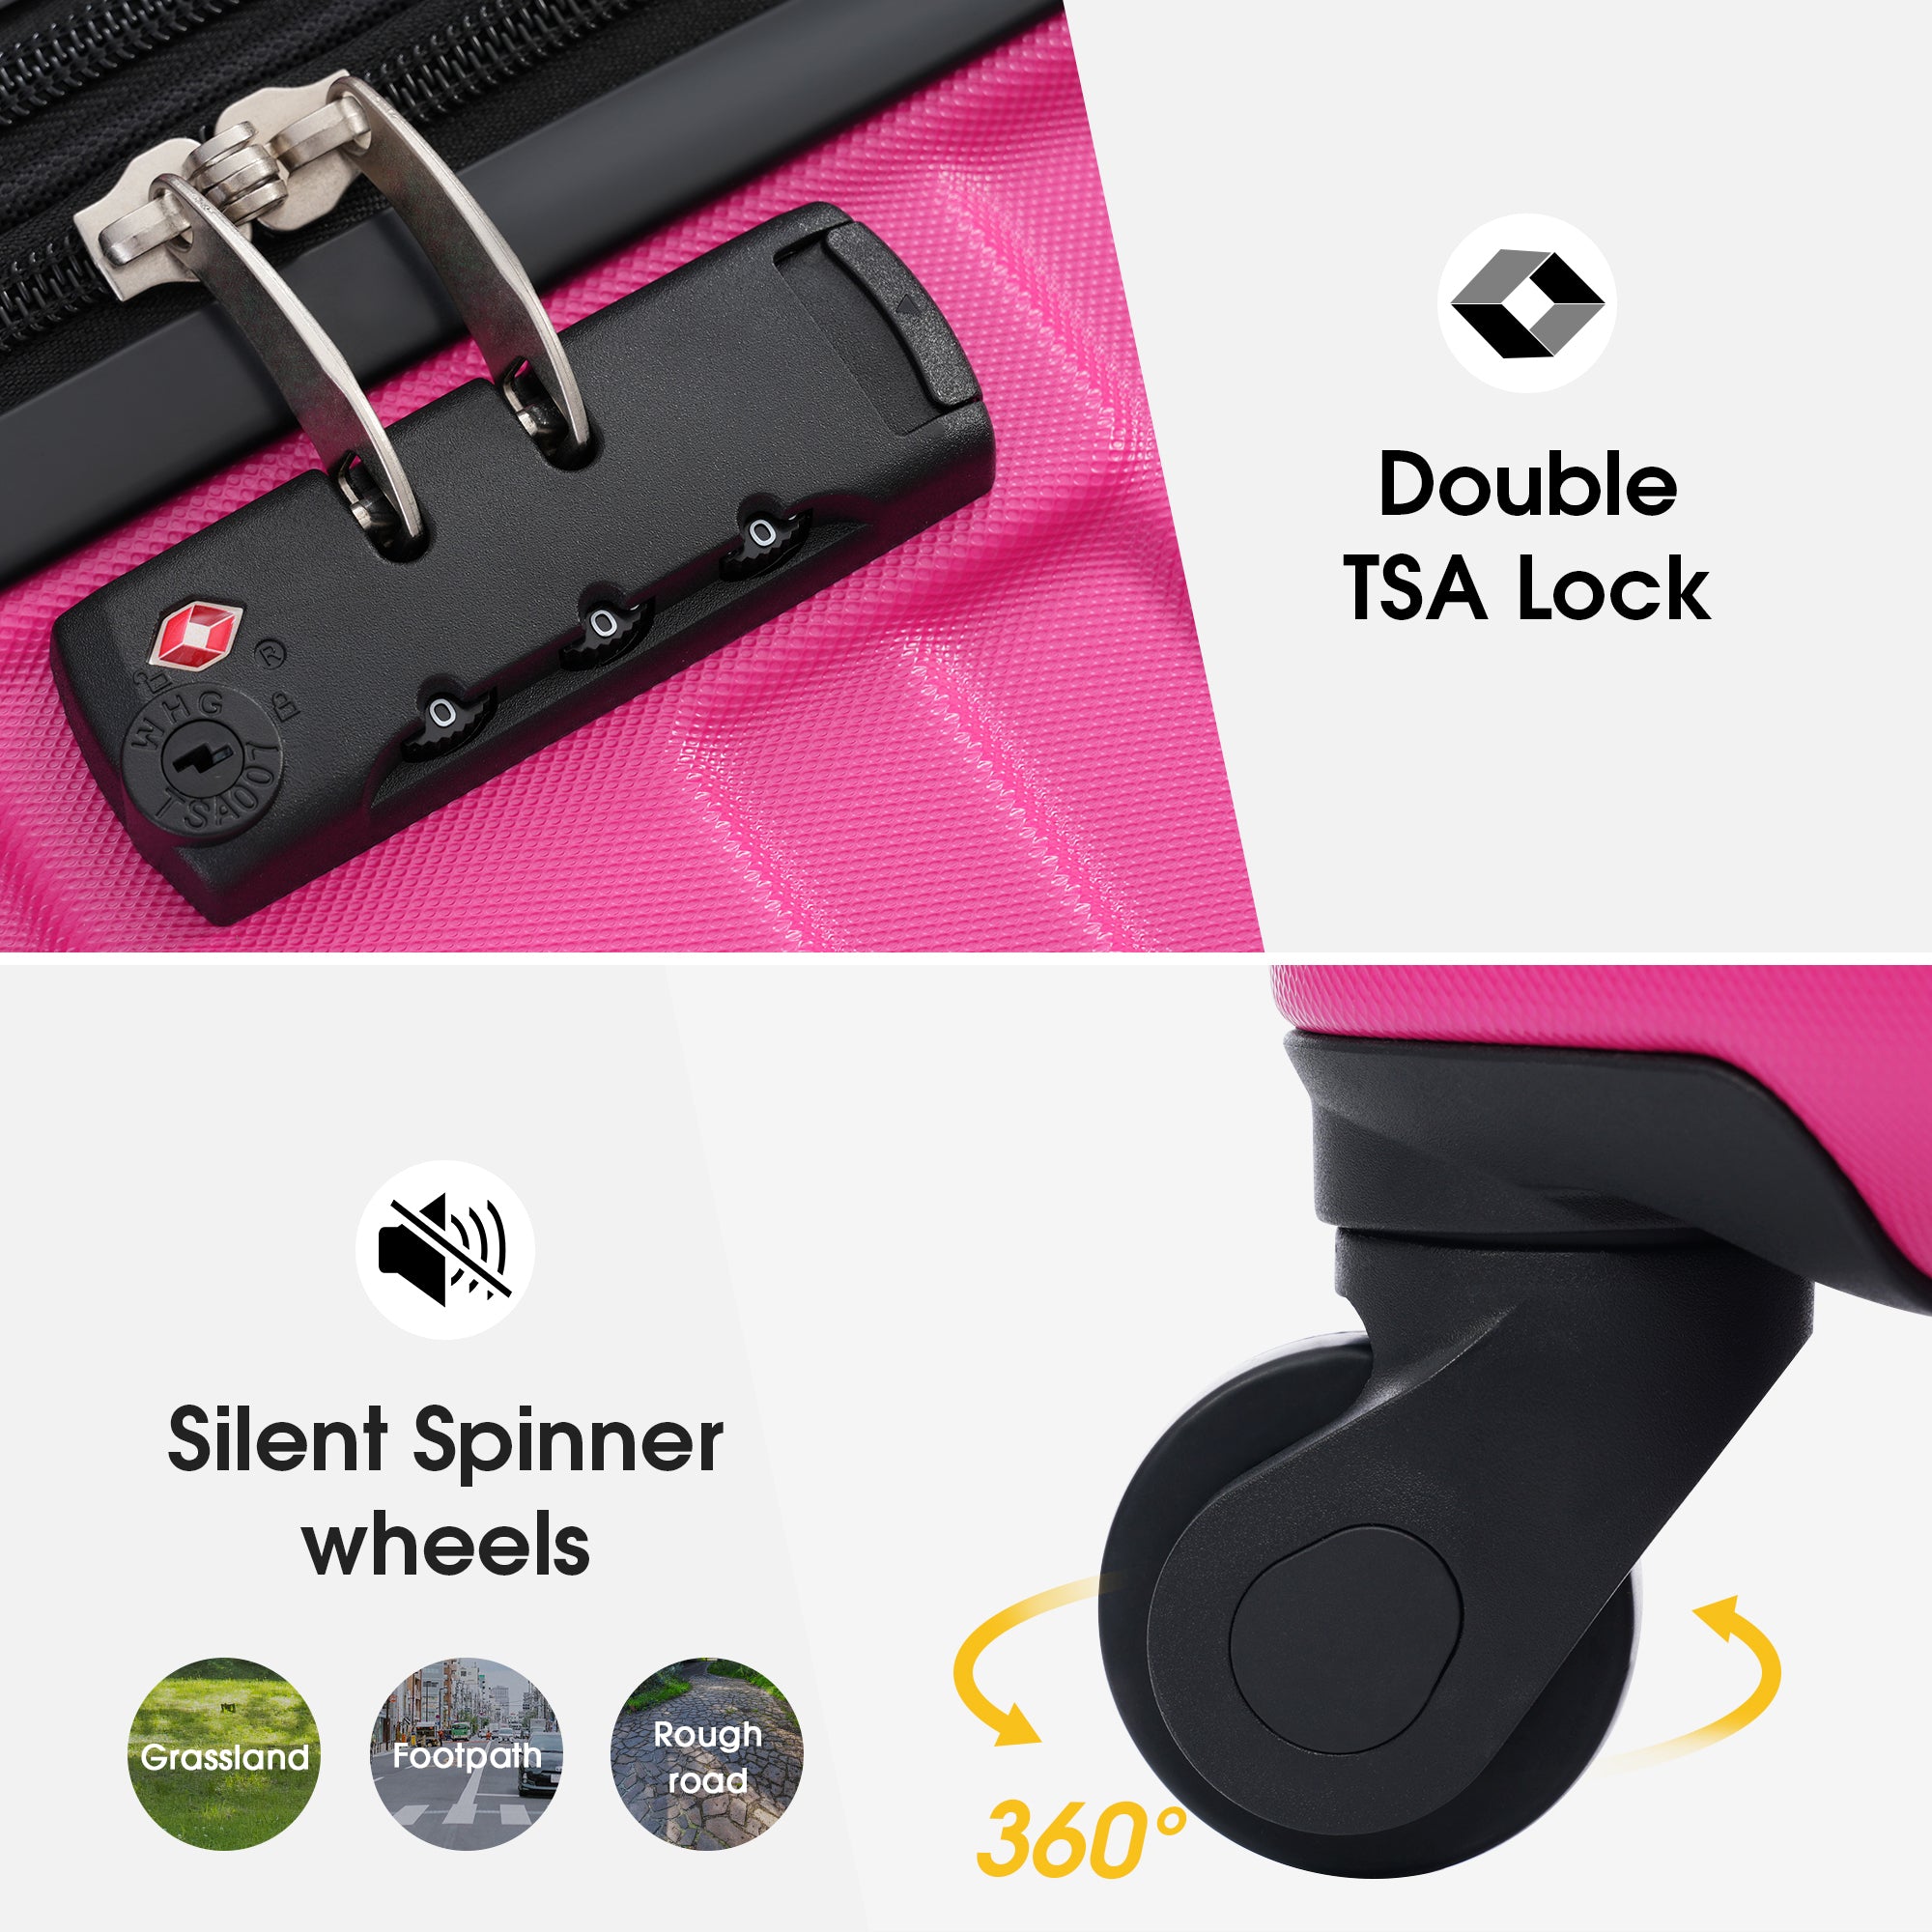 Merax Luggage with TSA Lock Spinner Wheels Hardside pink-abs